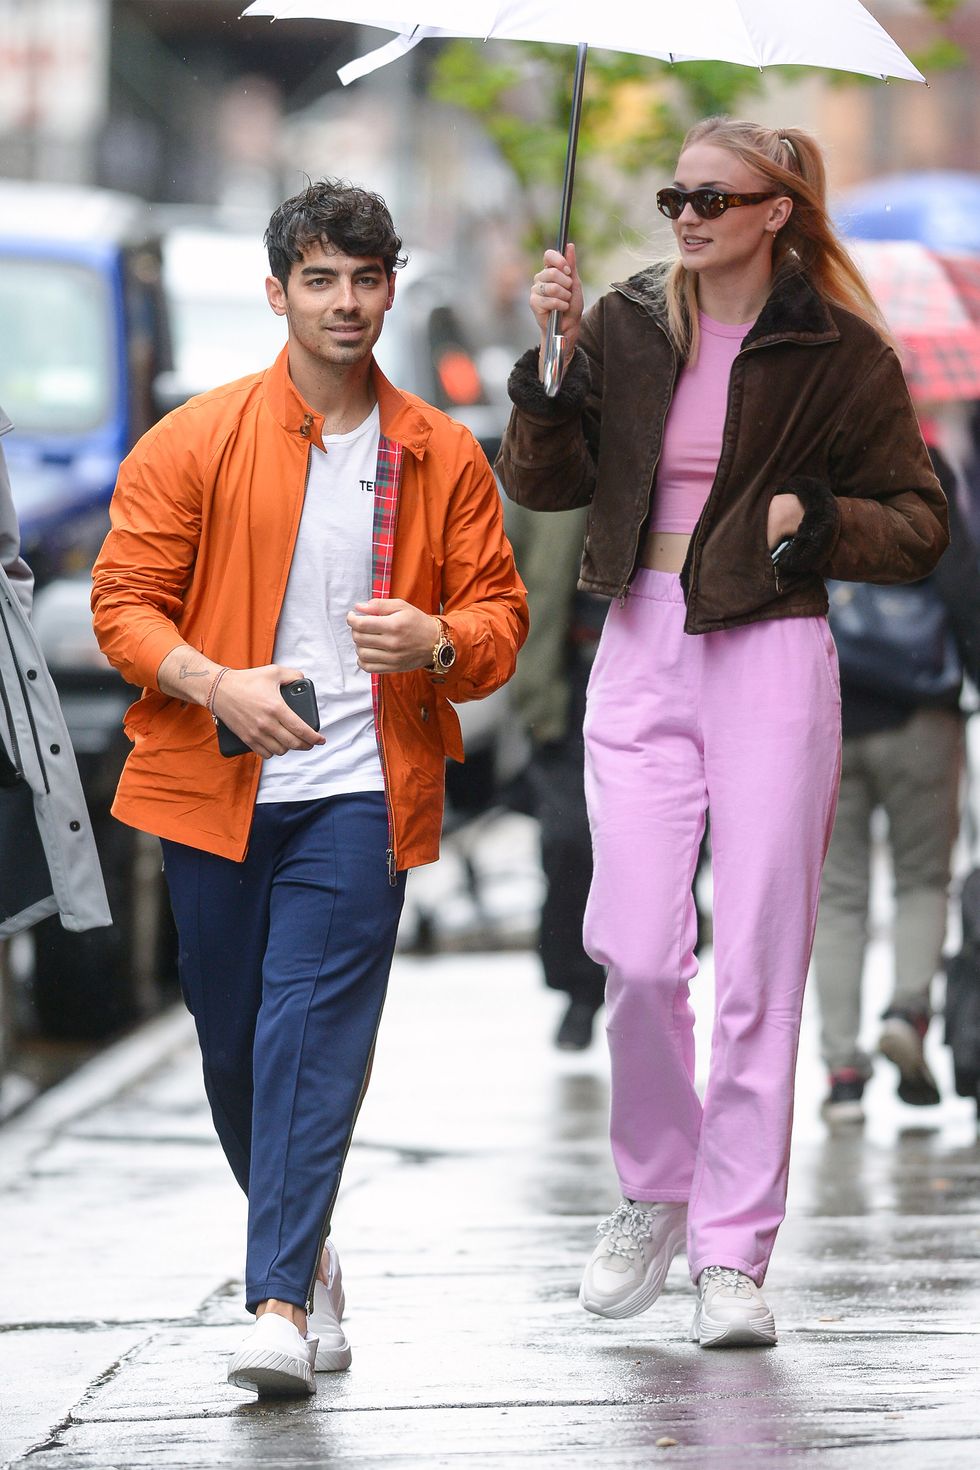 Sophie Turner And Joe Jonas Walk The Red Carpet In Louis Vuitton